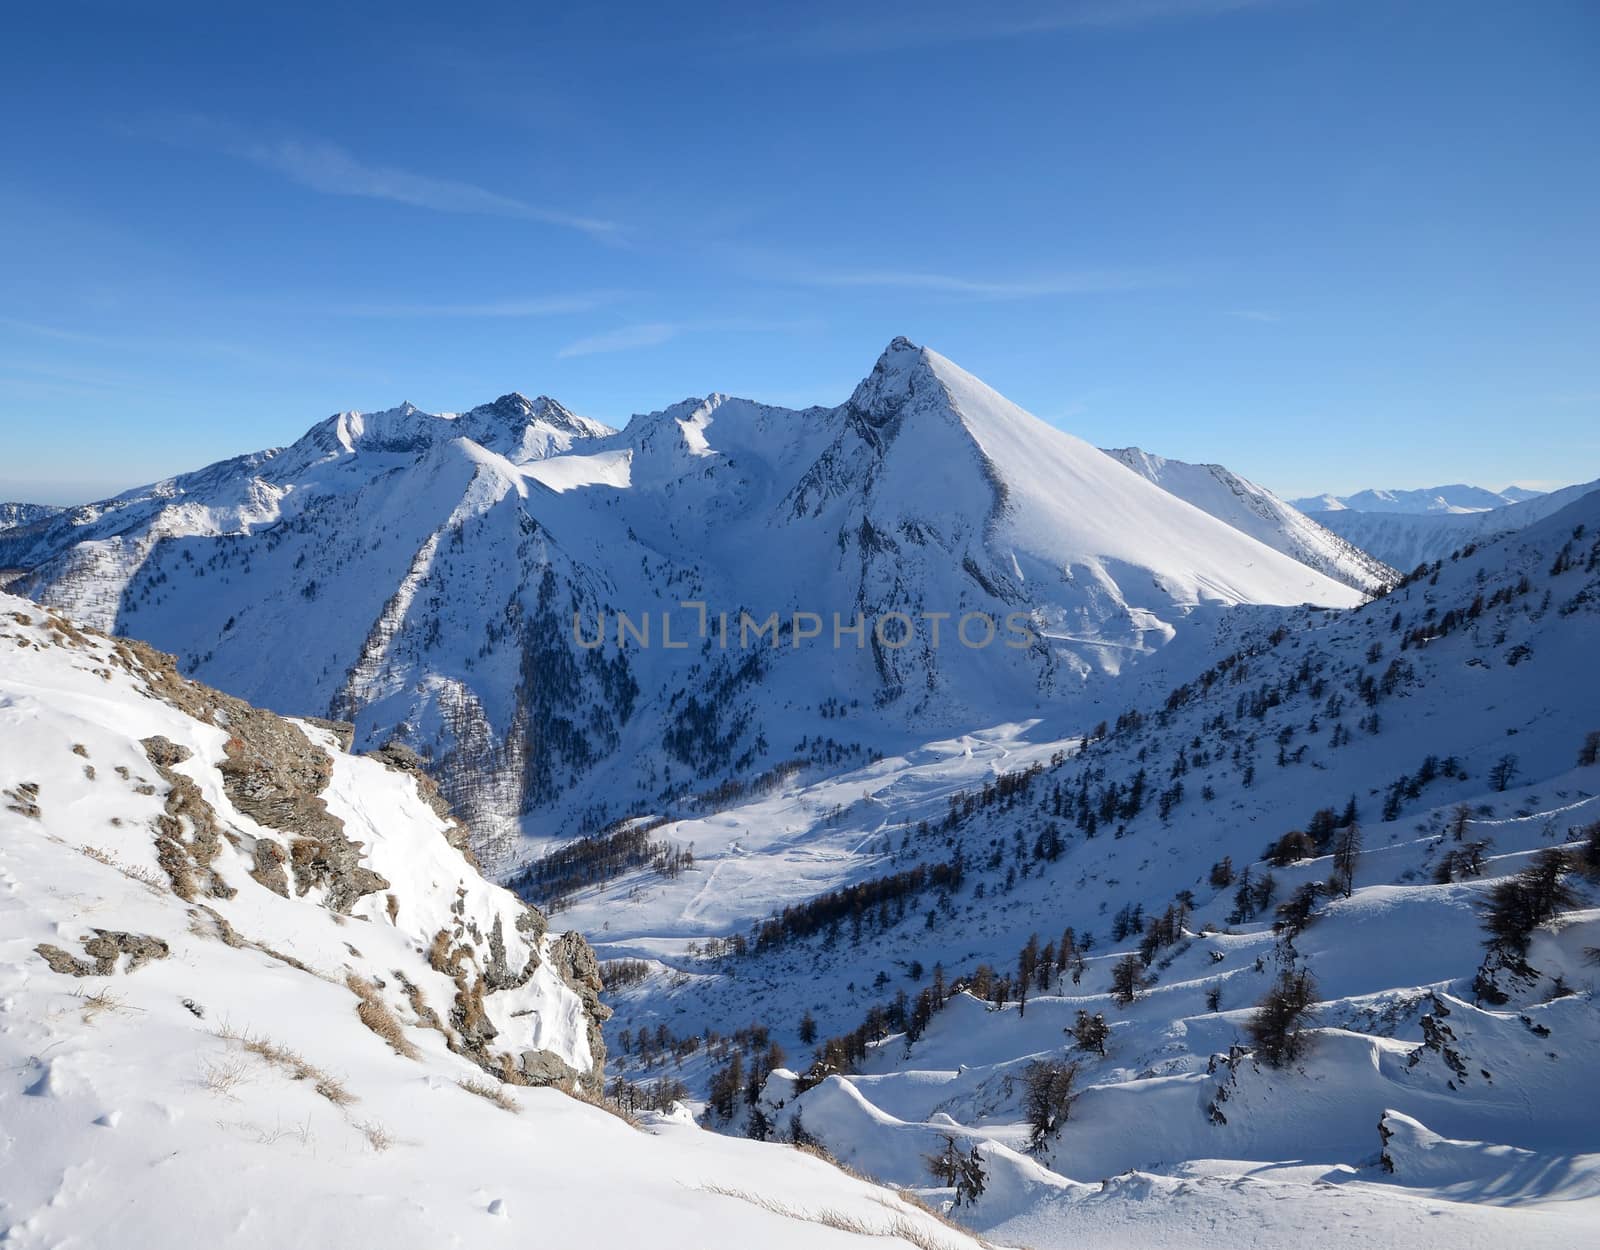 Elegant snowcapped mountain peak by fbxx